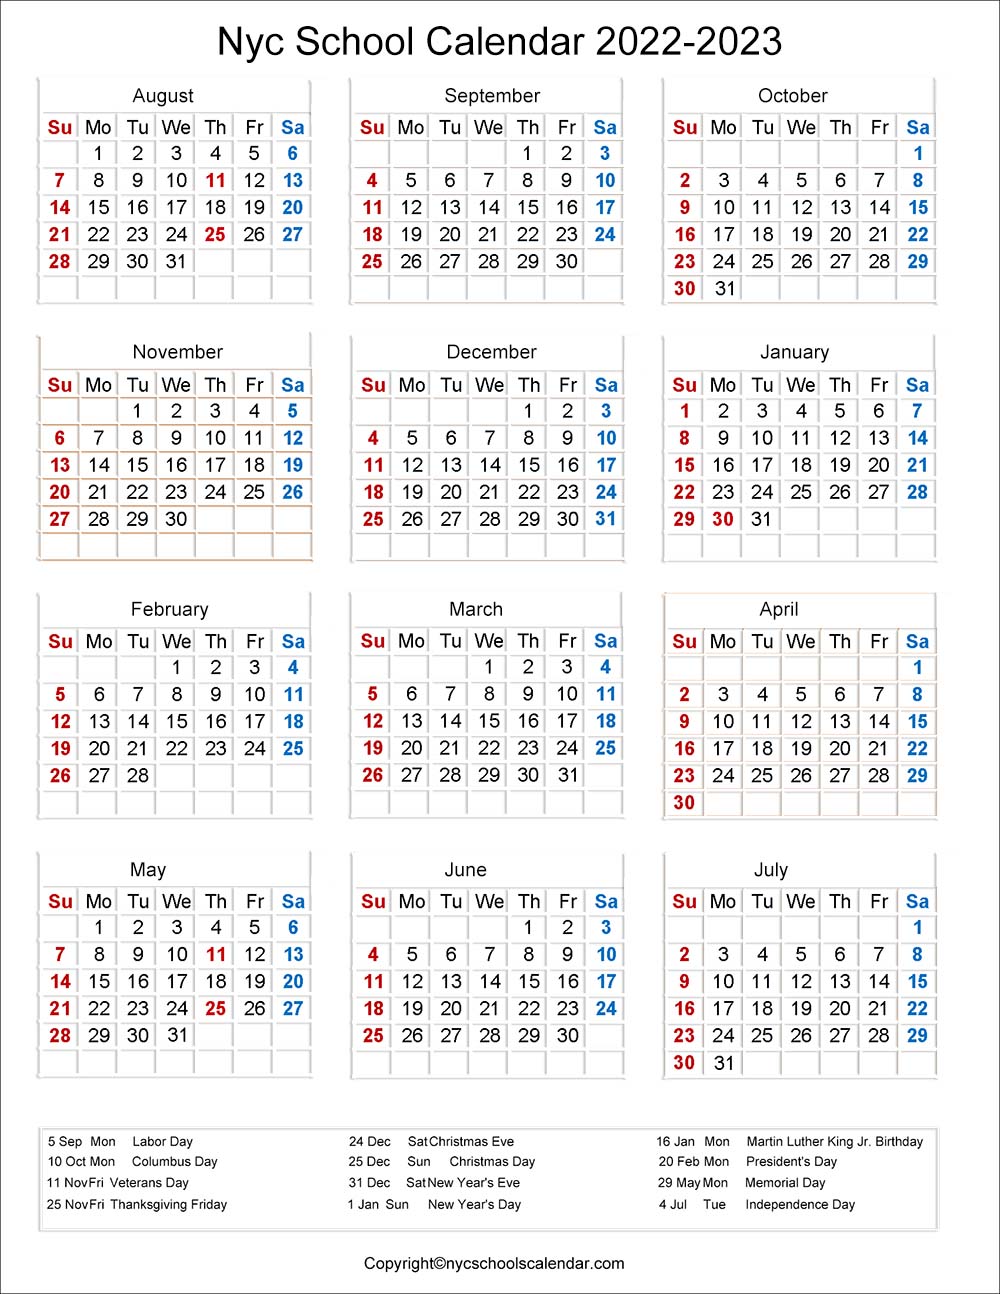 Doe Calendar 2022 23 Pdf ❤️Nyc School Holidays Calendar 2022-2023 ✓